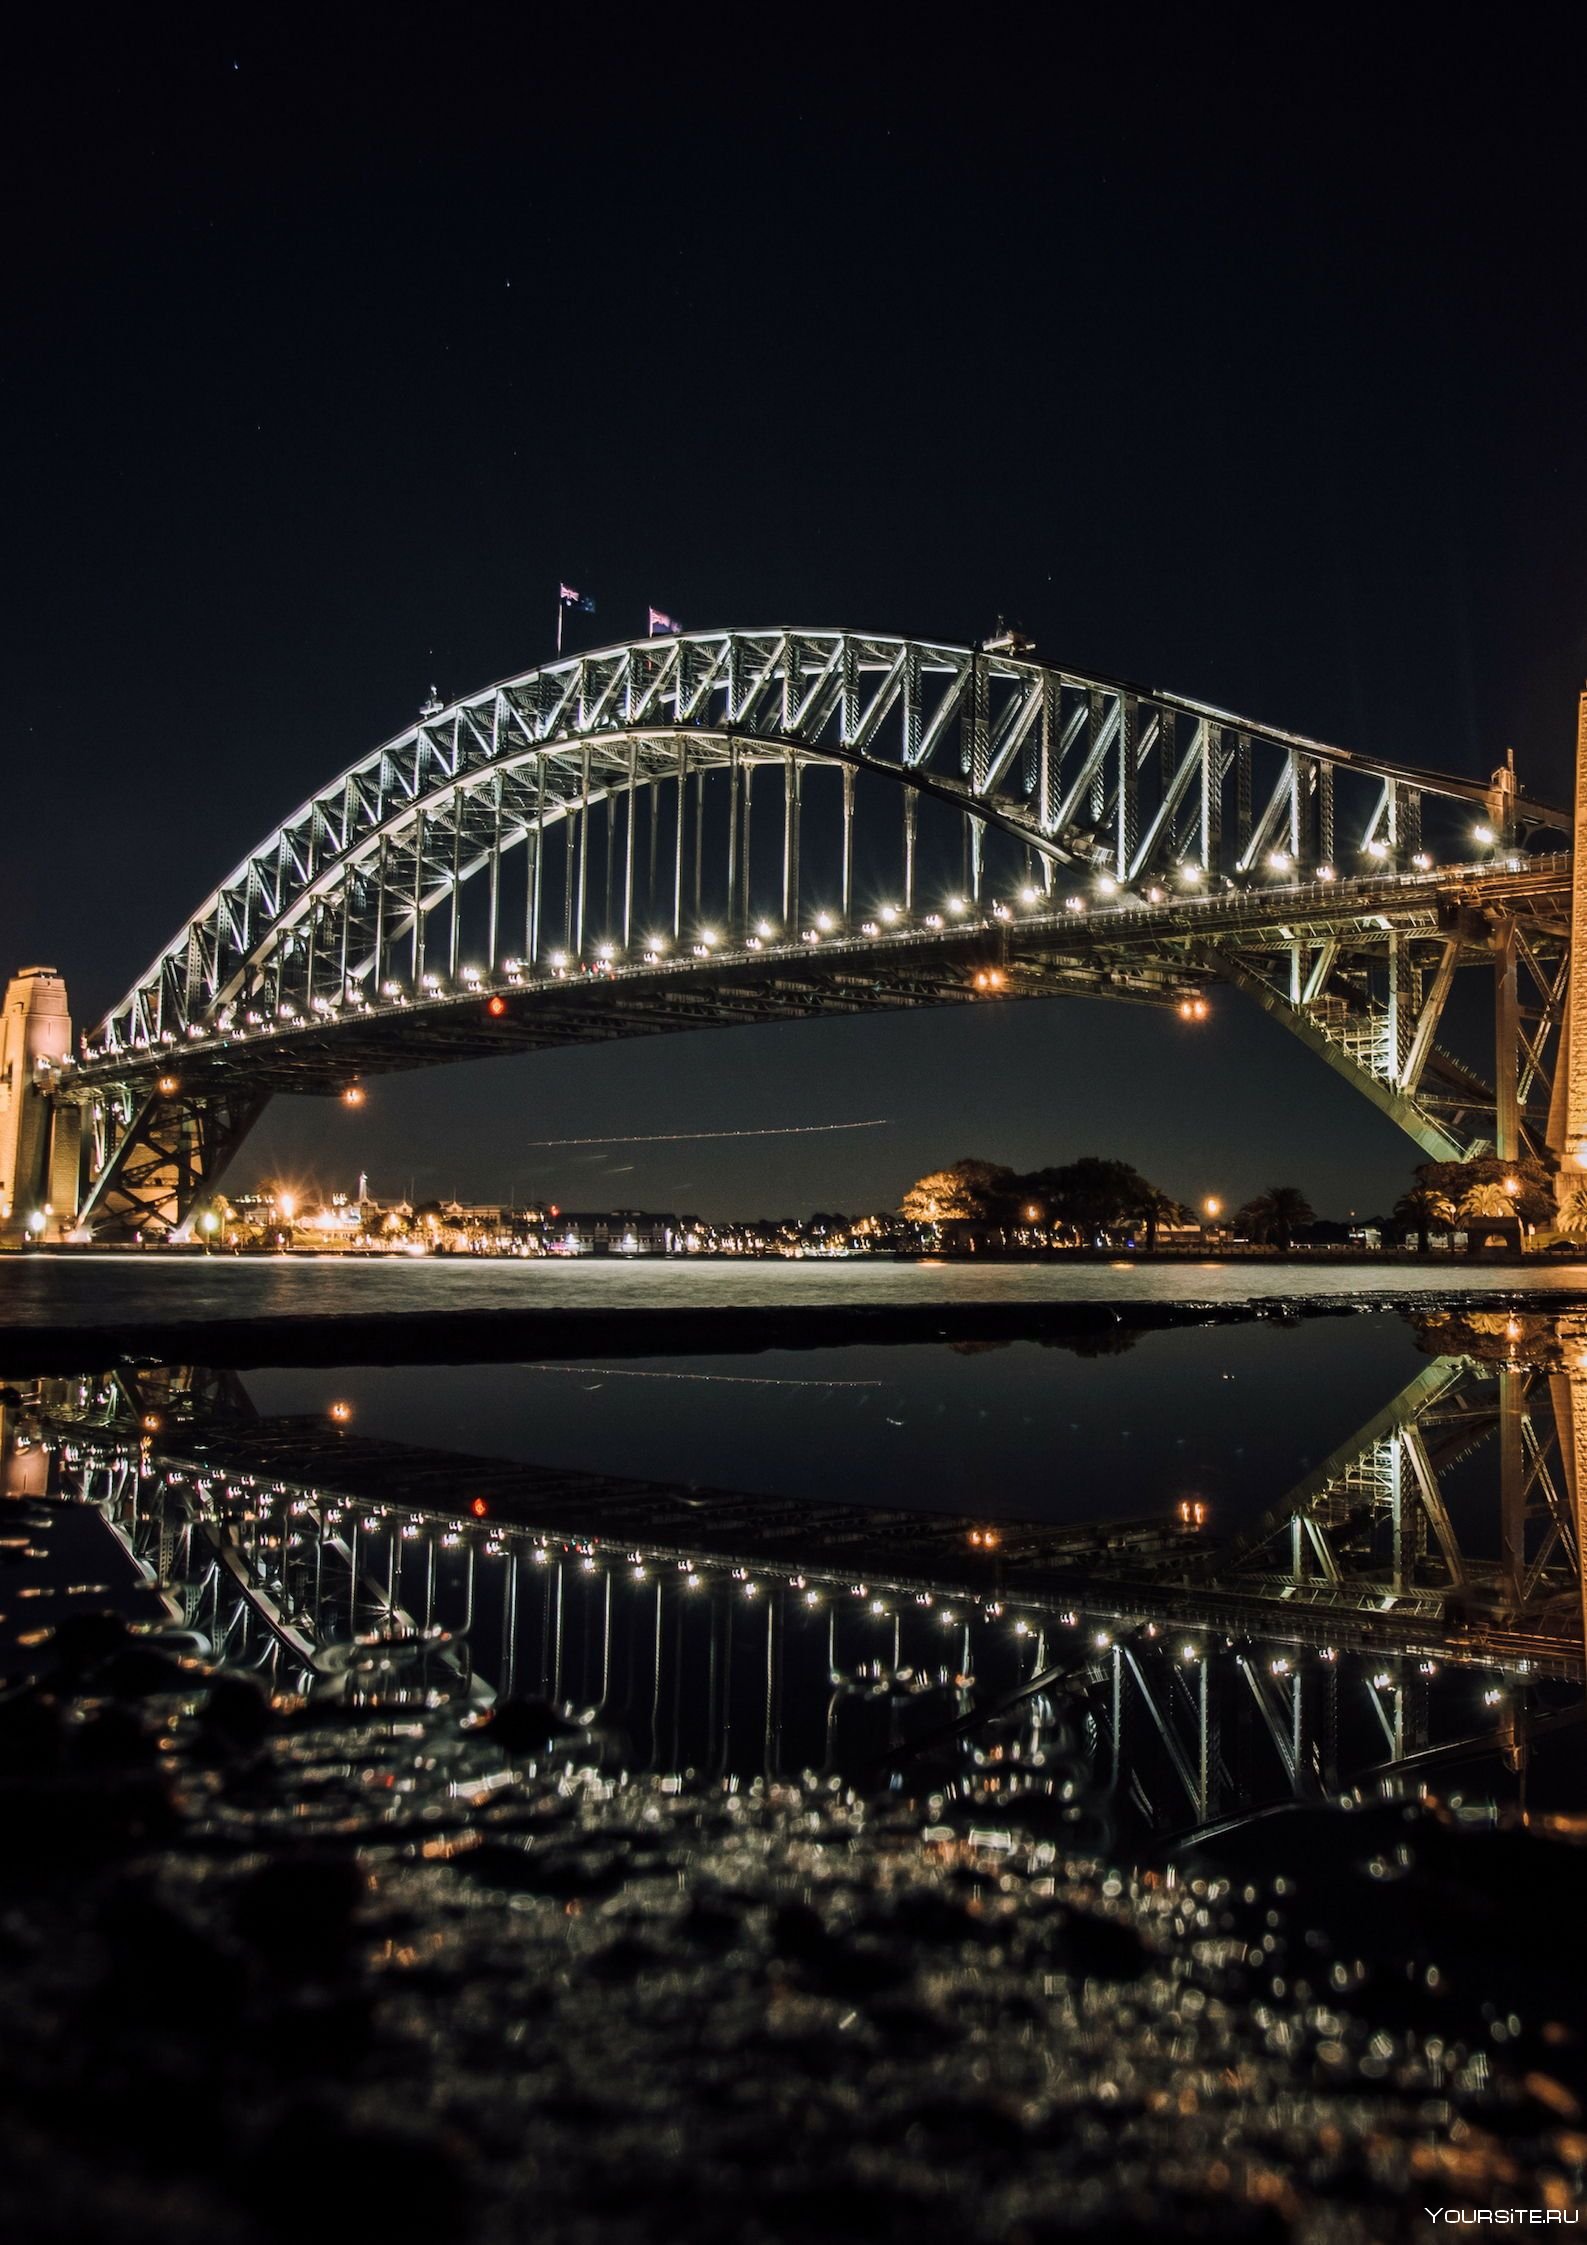 Harbour bridge. Харбор-бридж Сидней. Мост Харбор бридж. Мост Харбор бридж в Австралии. Харбор-бридж (Сидней, Австралия).